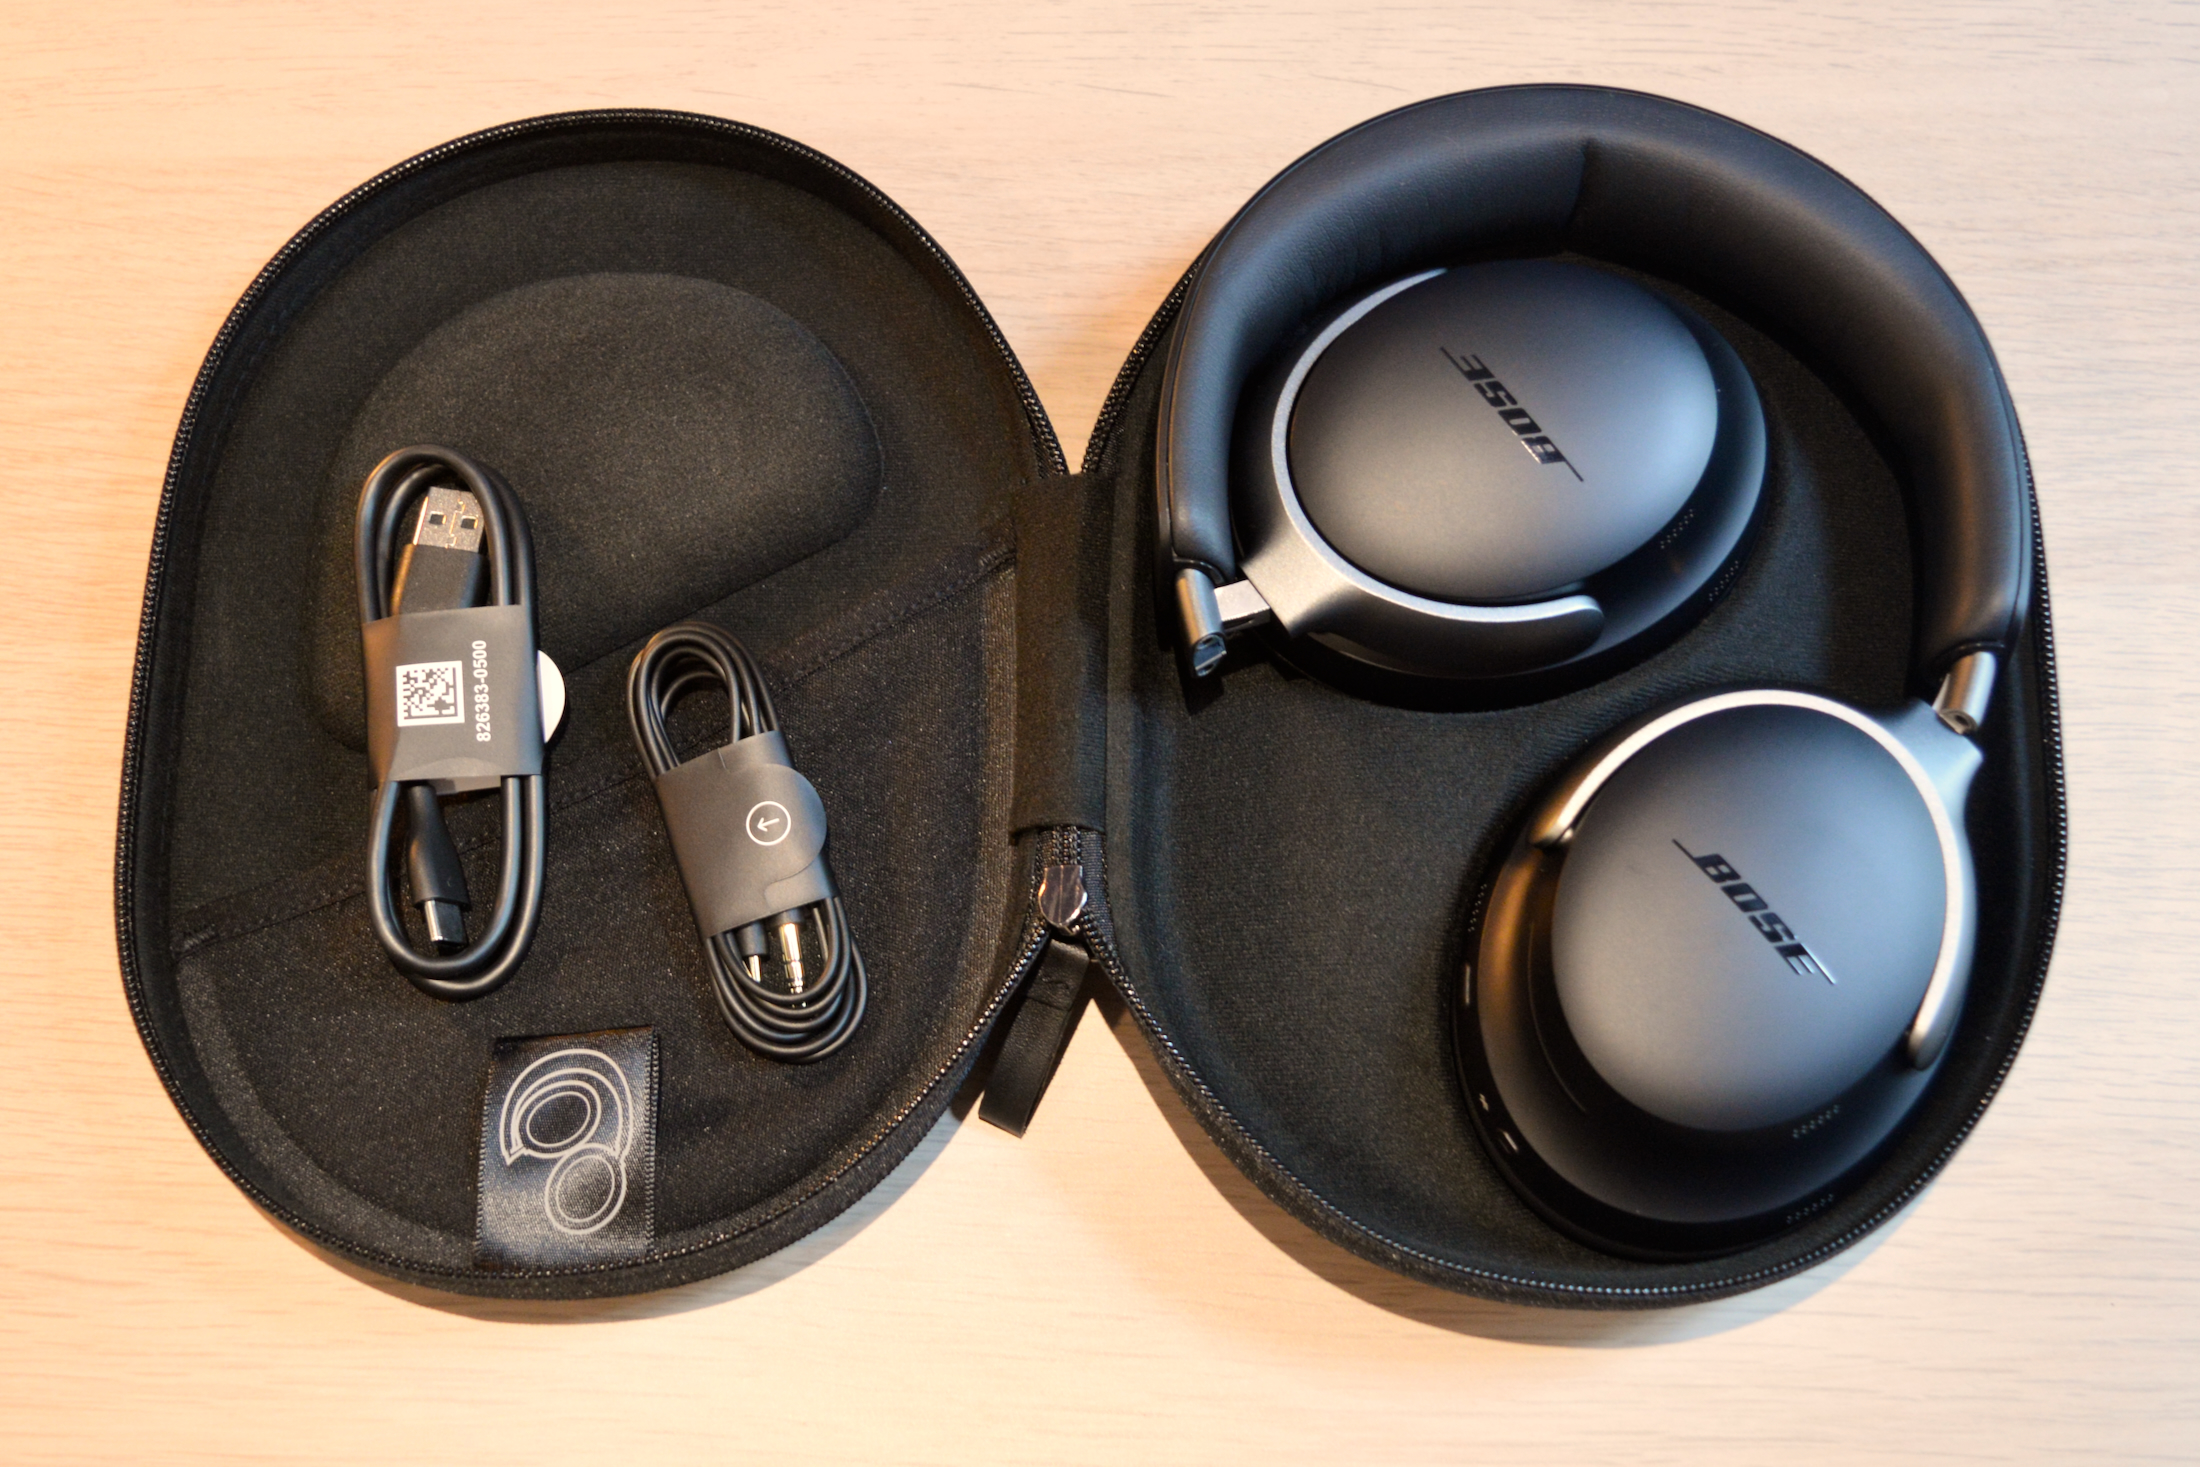 Bose QuietComfort Headphones review: Not ultra, but still great